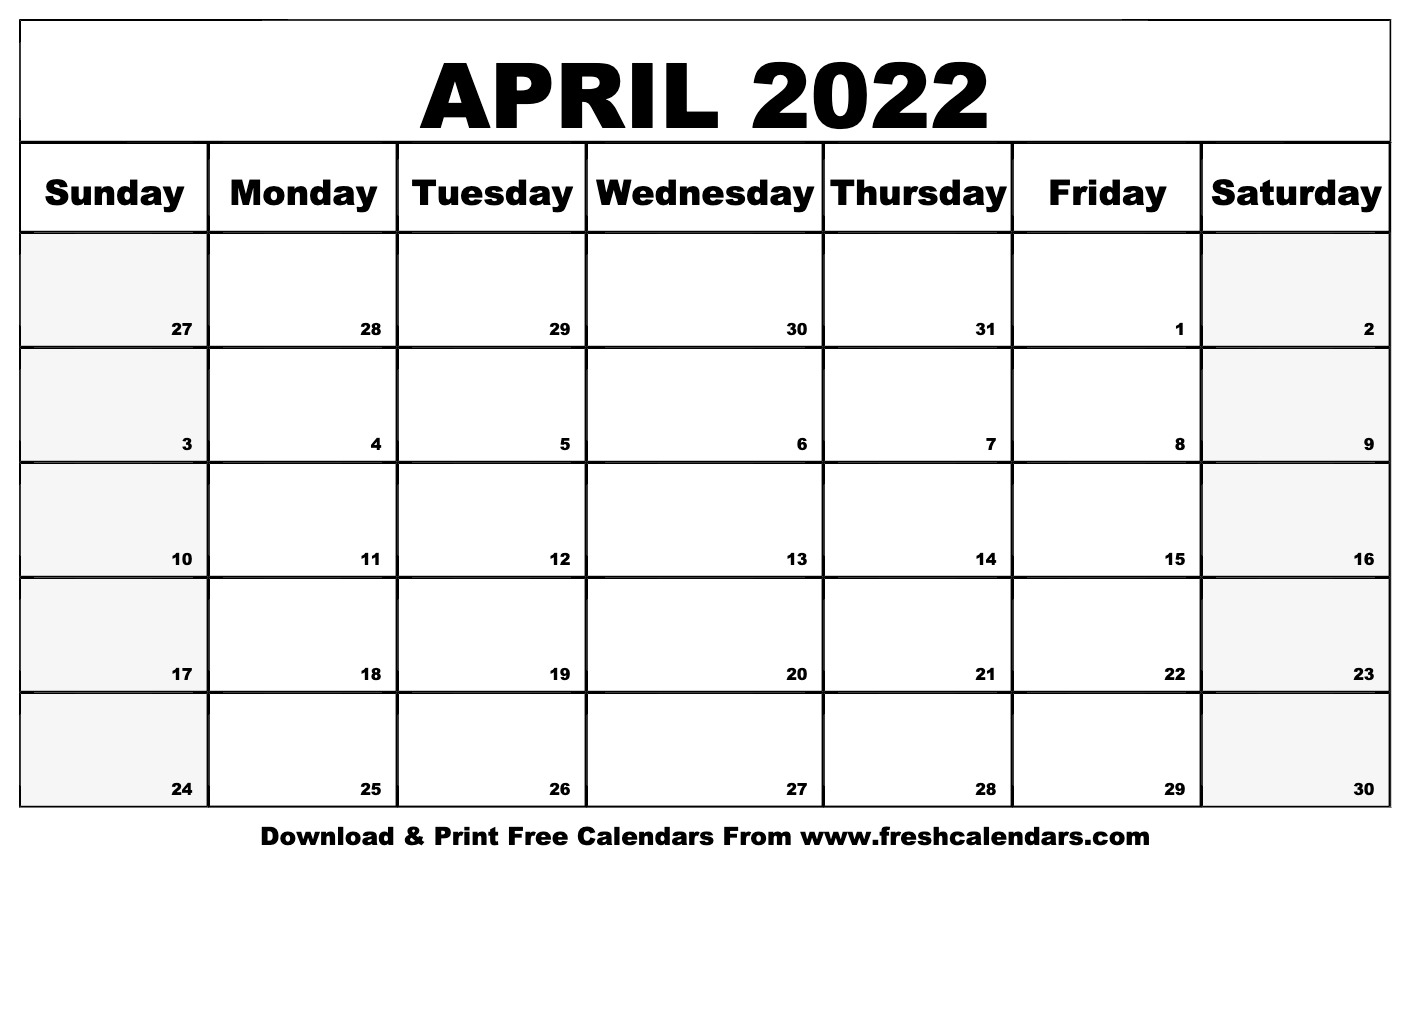 Chickfila Calendar April 2022 - July 2022 Calendar